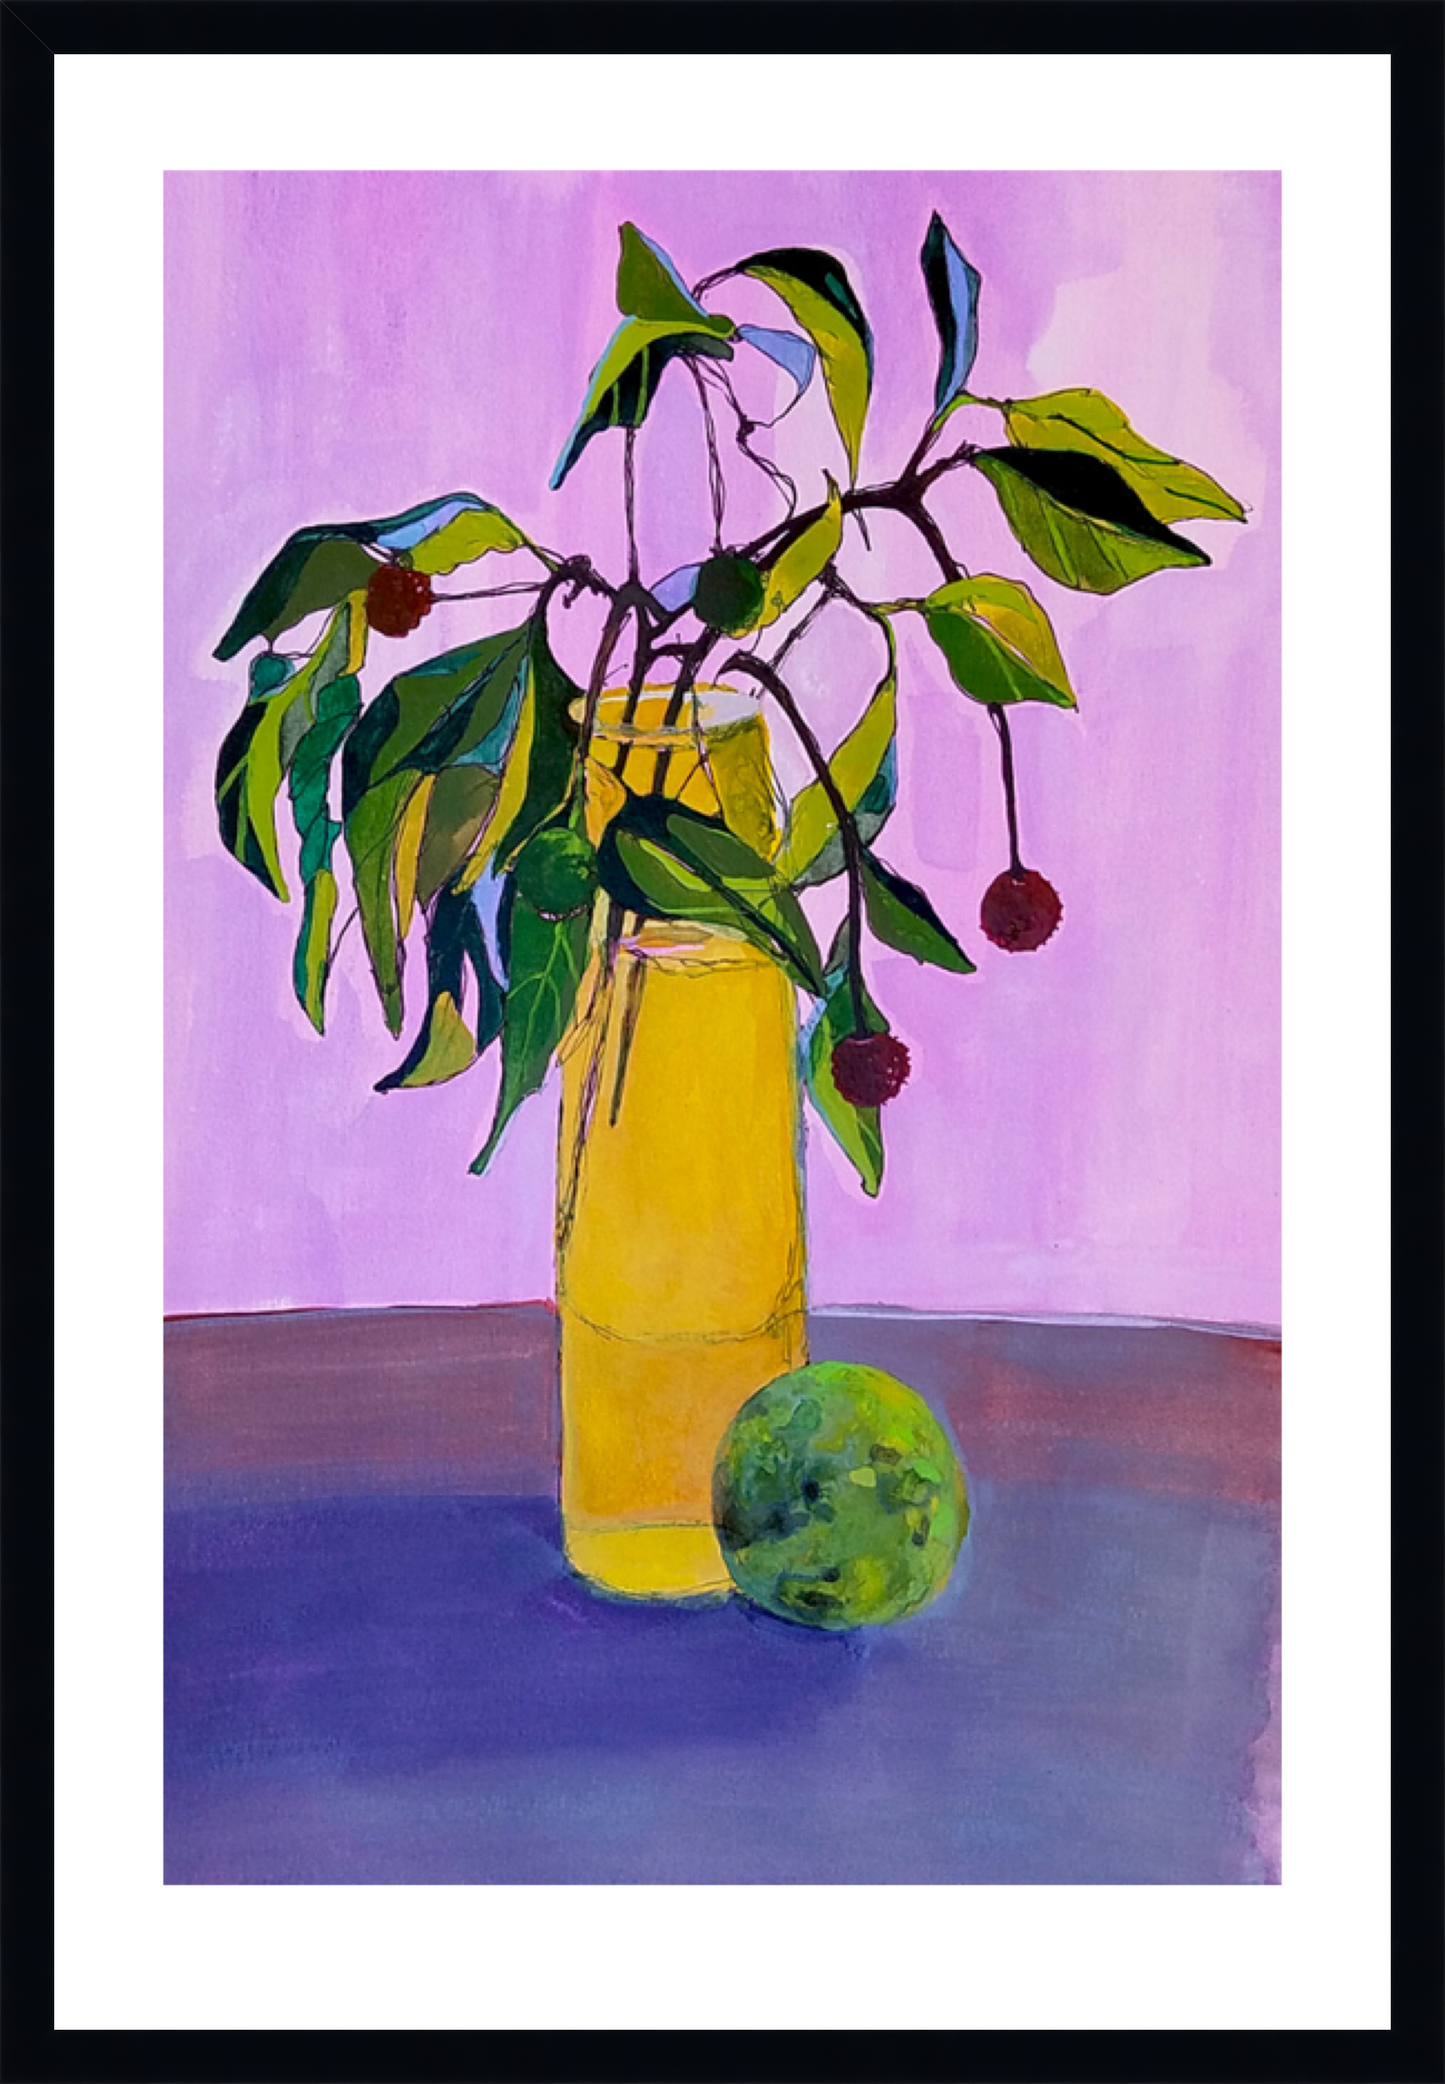 Summer To Fall: Kousa Fruit (Cornus kousa) with Green Apple - print by Malaika Ross